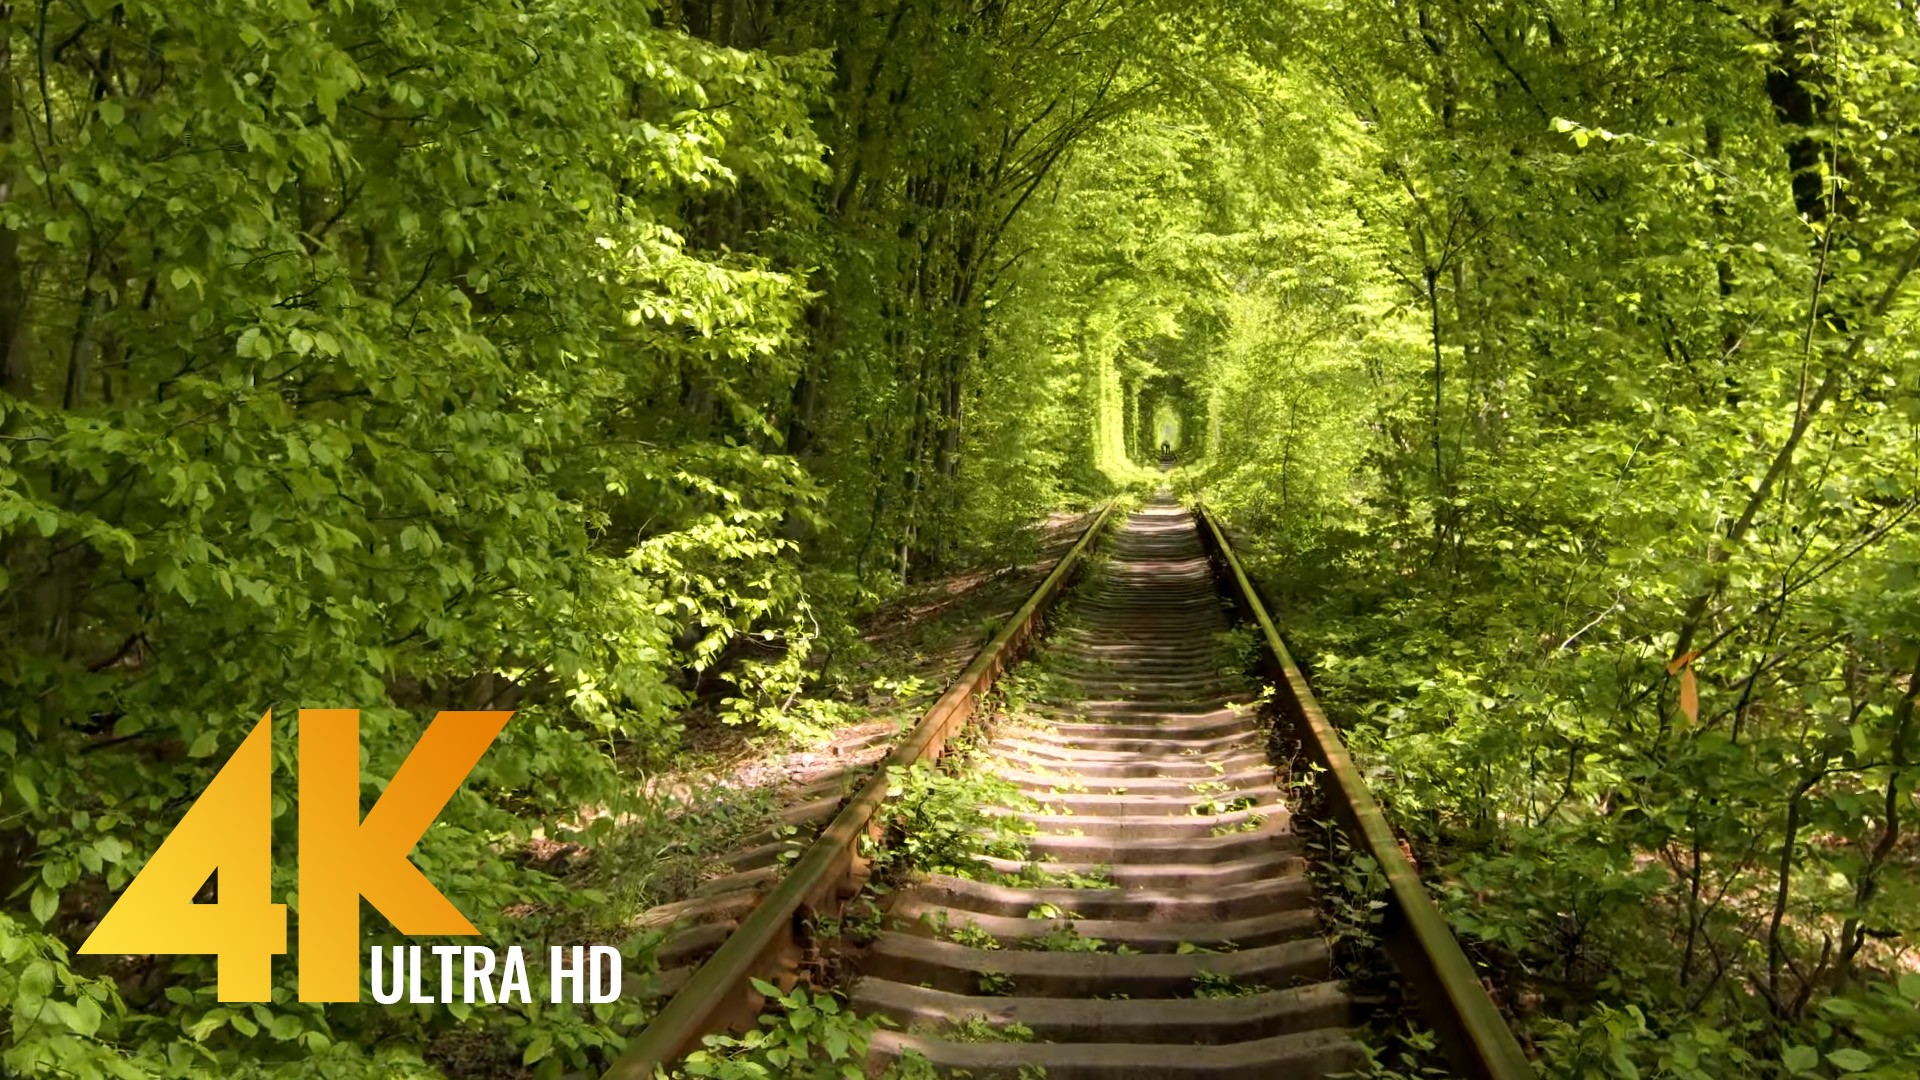 Tunnel of Love in Klevan, Ukraine - 4K Nature Relaxation Video - Ukraine | ProArtInc